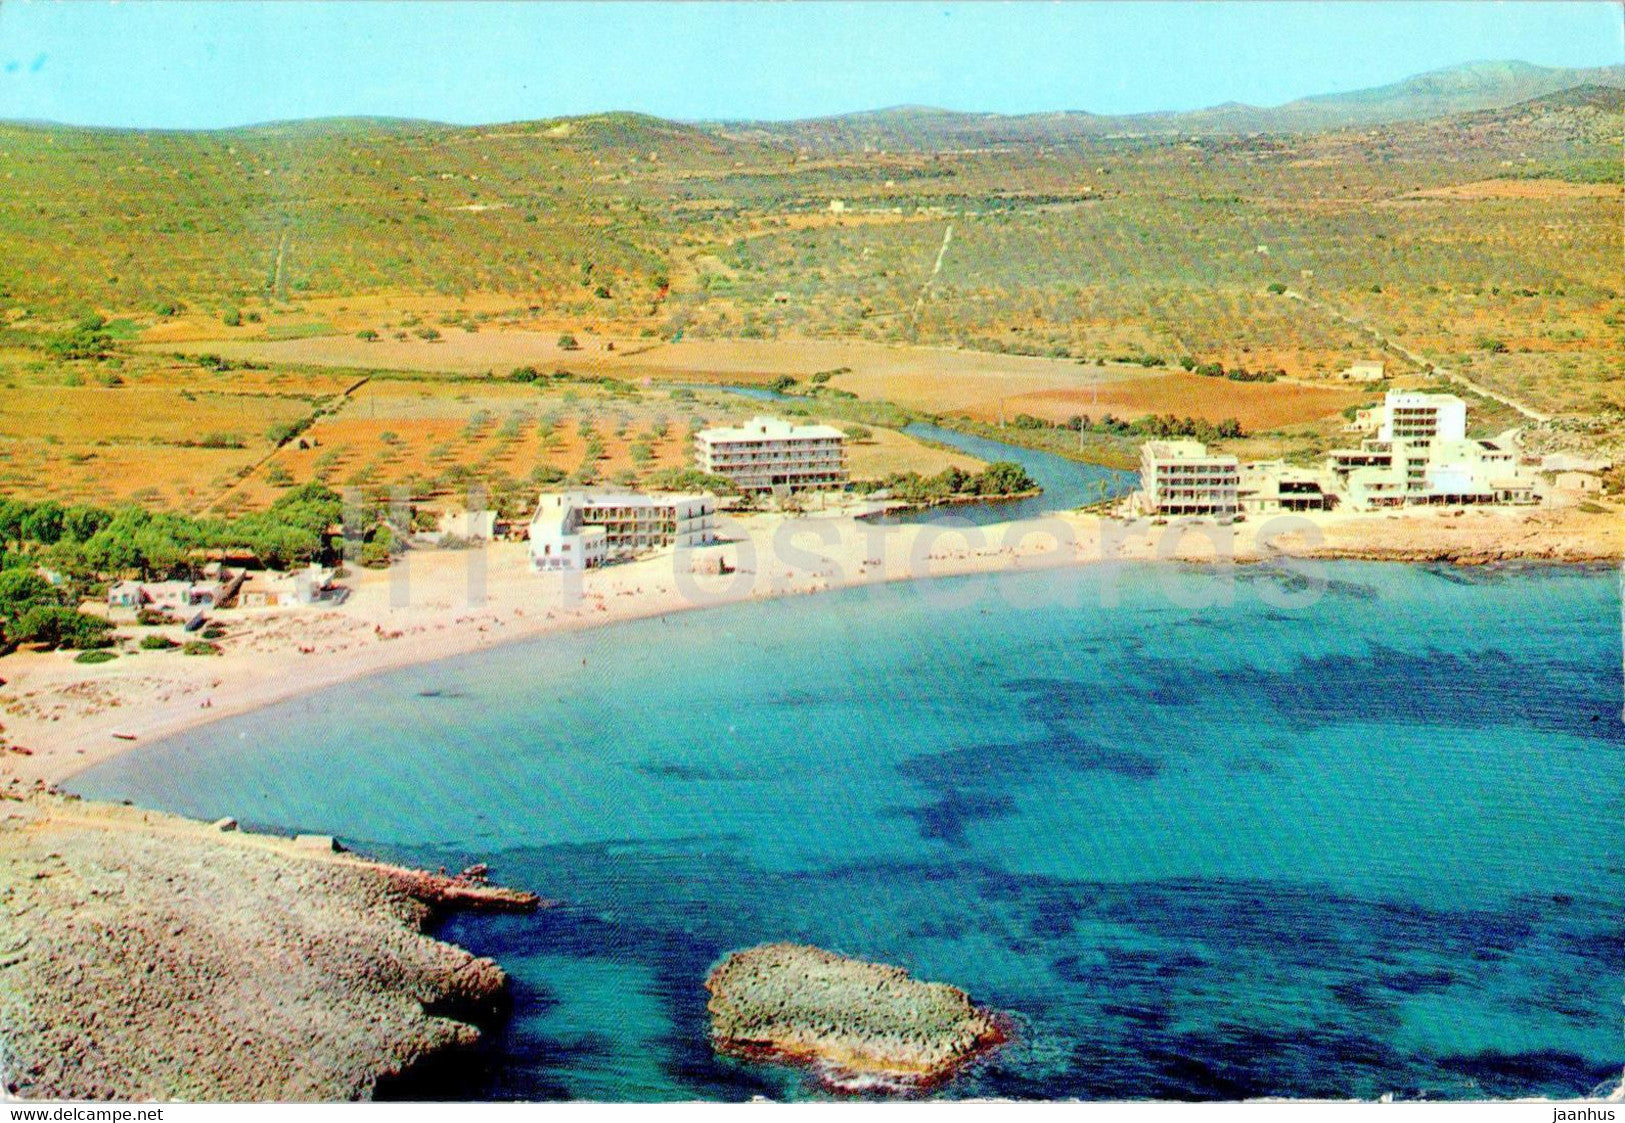 Manacor - Vista aerea de las playas de S'illot - Porto Cristo - Mallorca - 1966 - Spain - used - JH Postcards